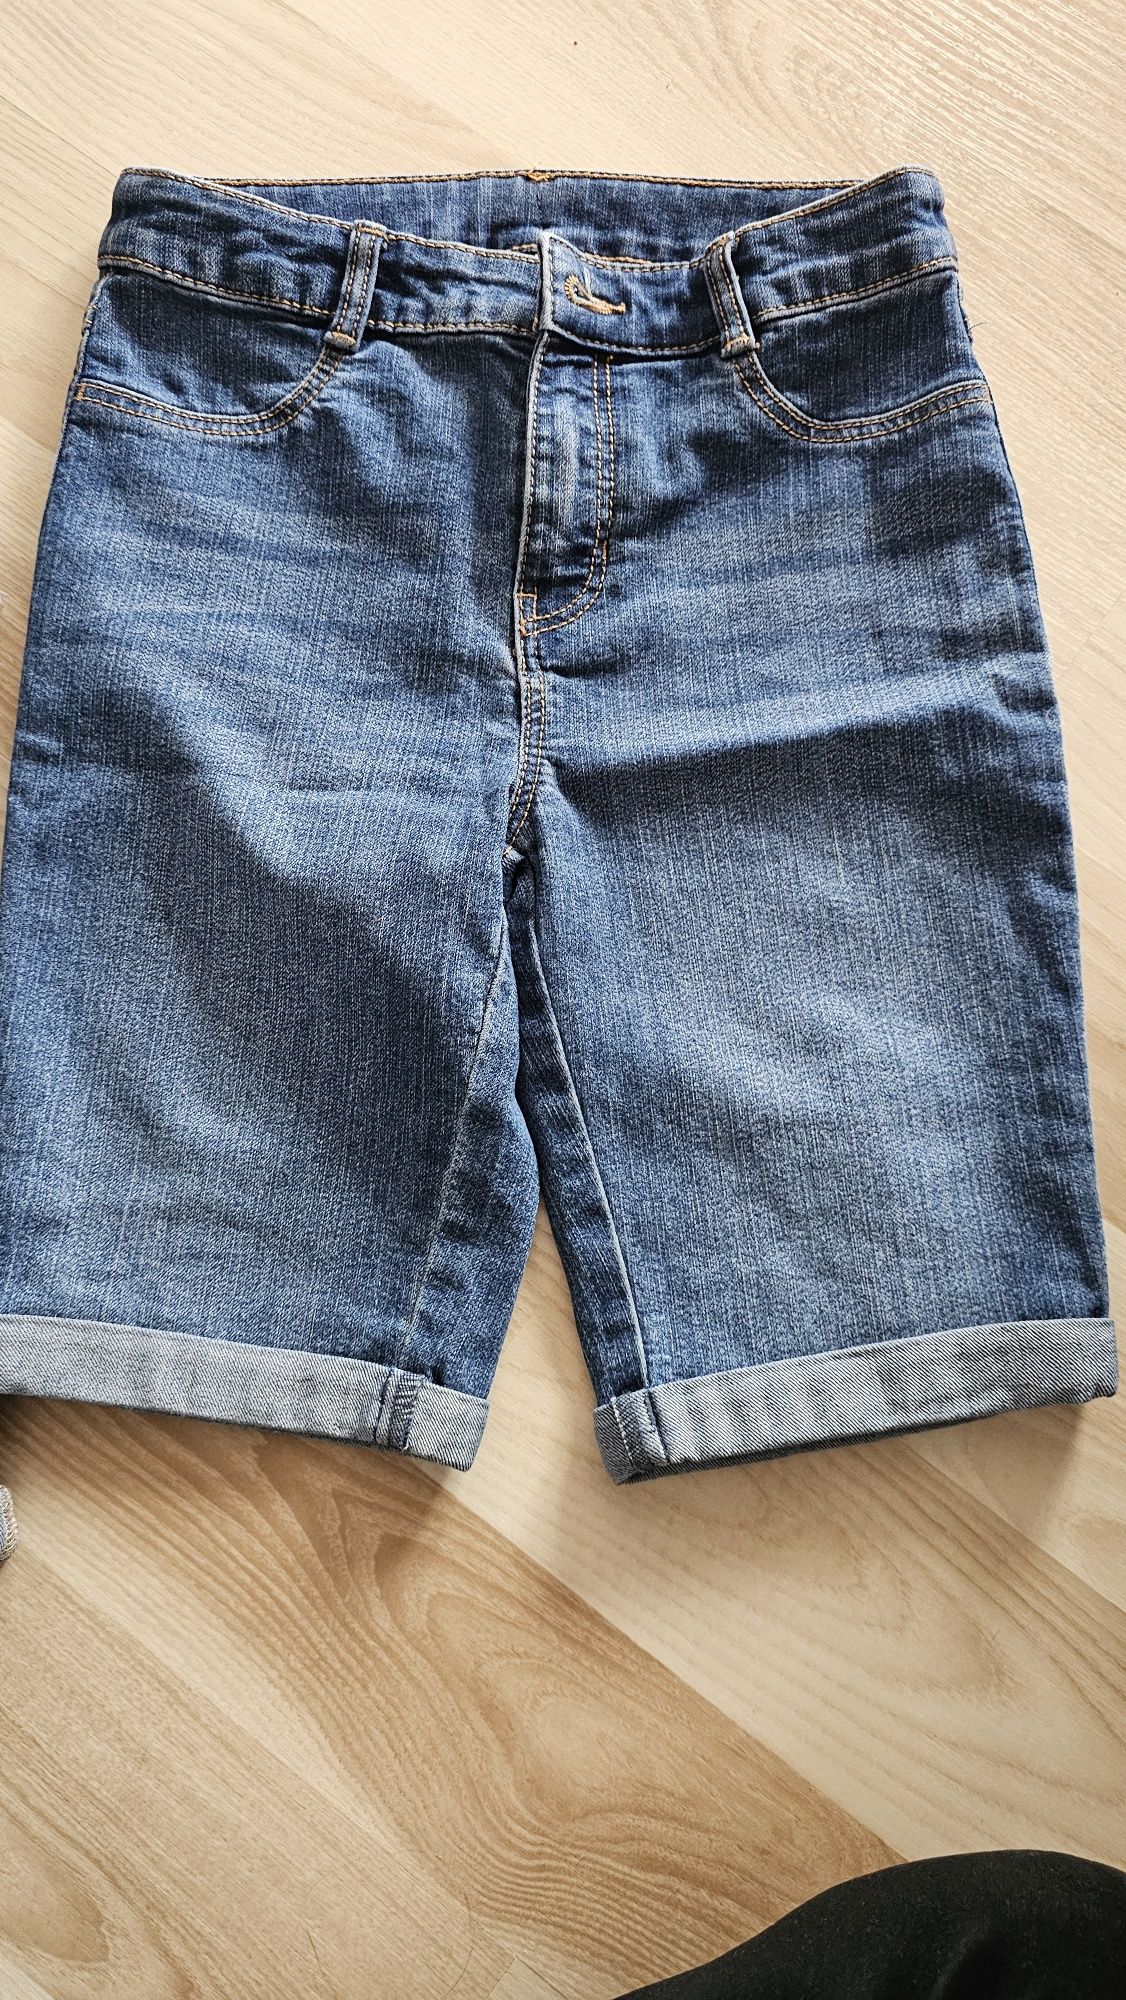 Pantaloni blugi scurți  122-140 marimi, 30 ron bucata